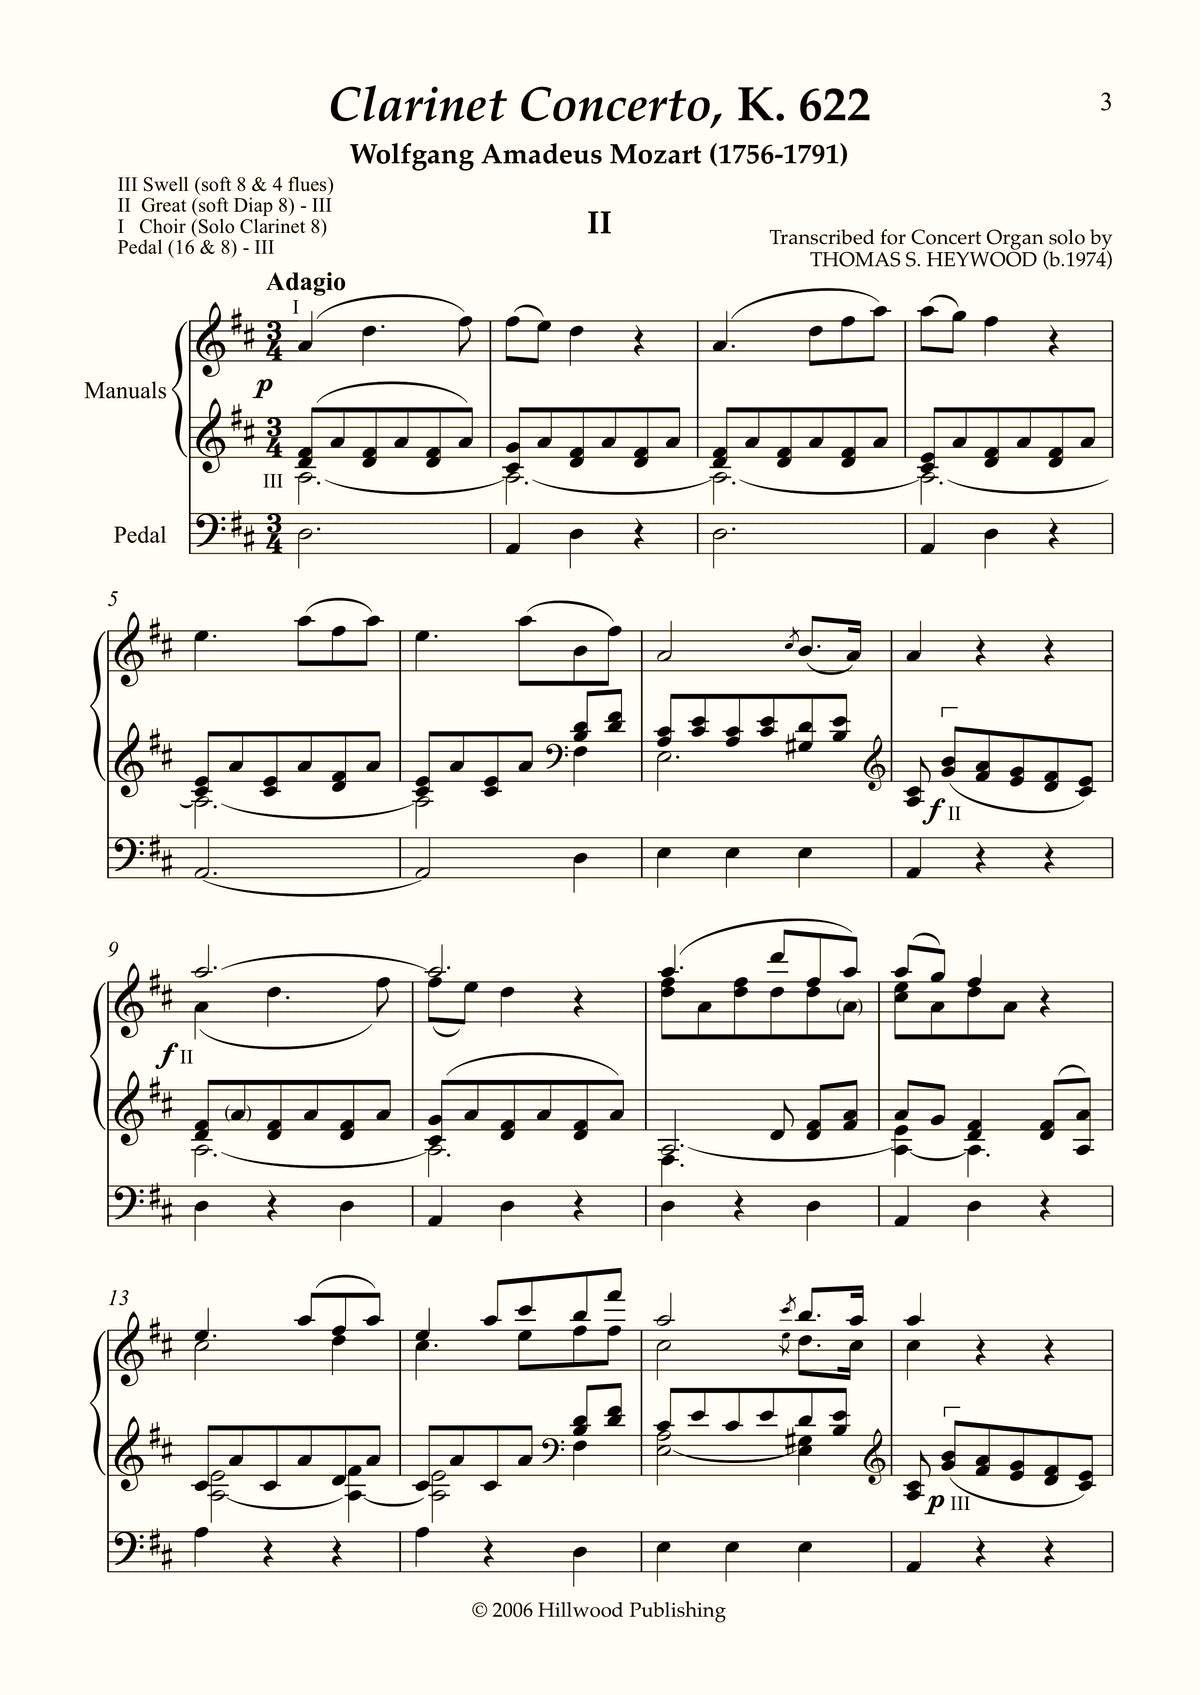 Mozart/Heywood - Adagio from the Clarinet Concerto, K. 622 (Score)